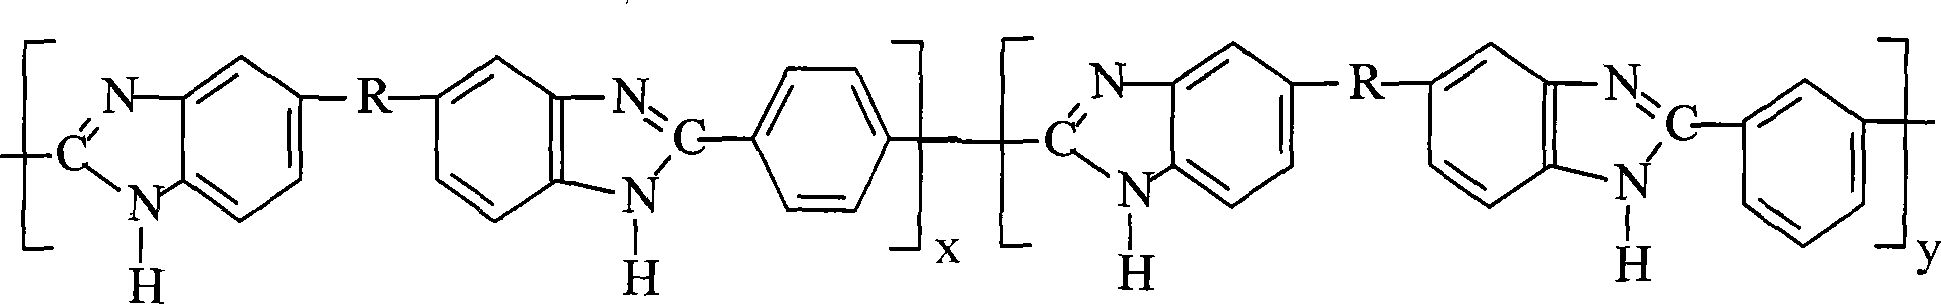 Method for preparing aromatic polybenzimidazole resin film